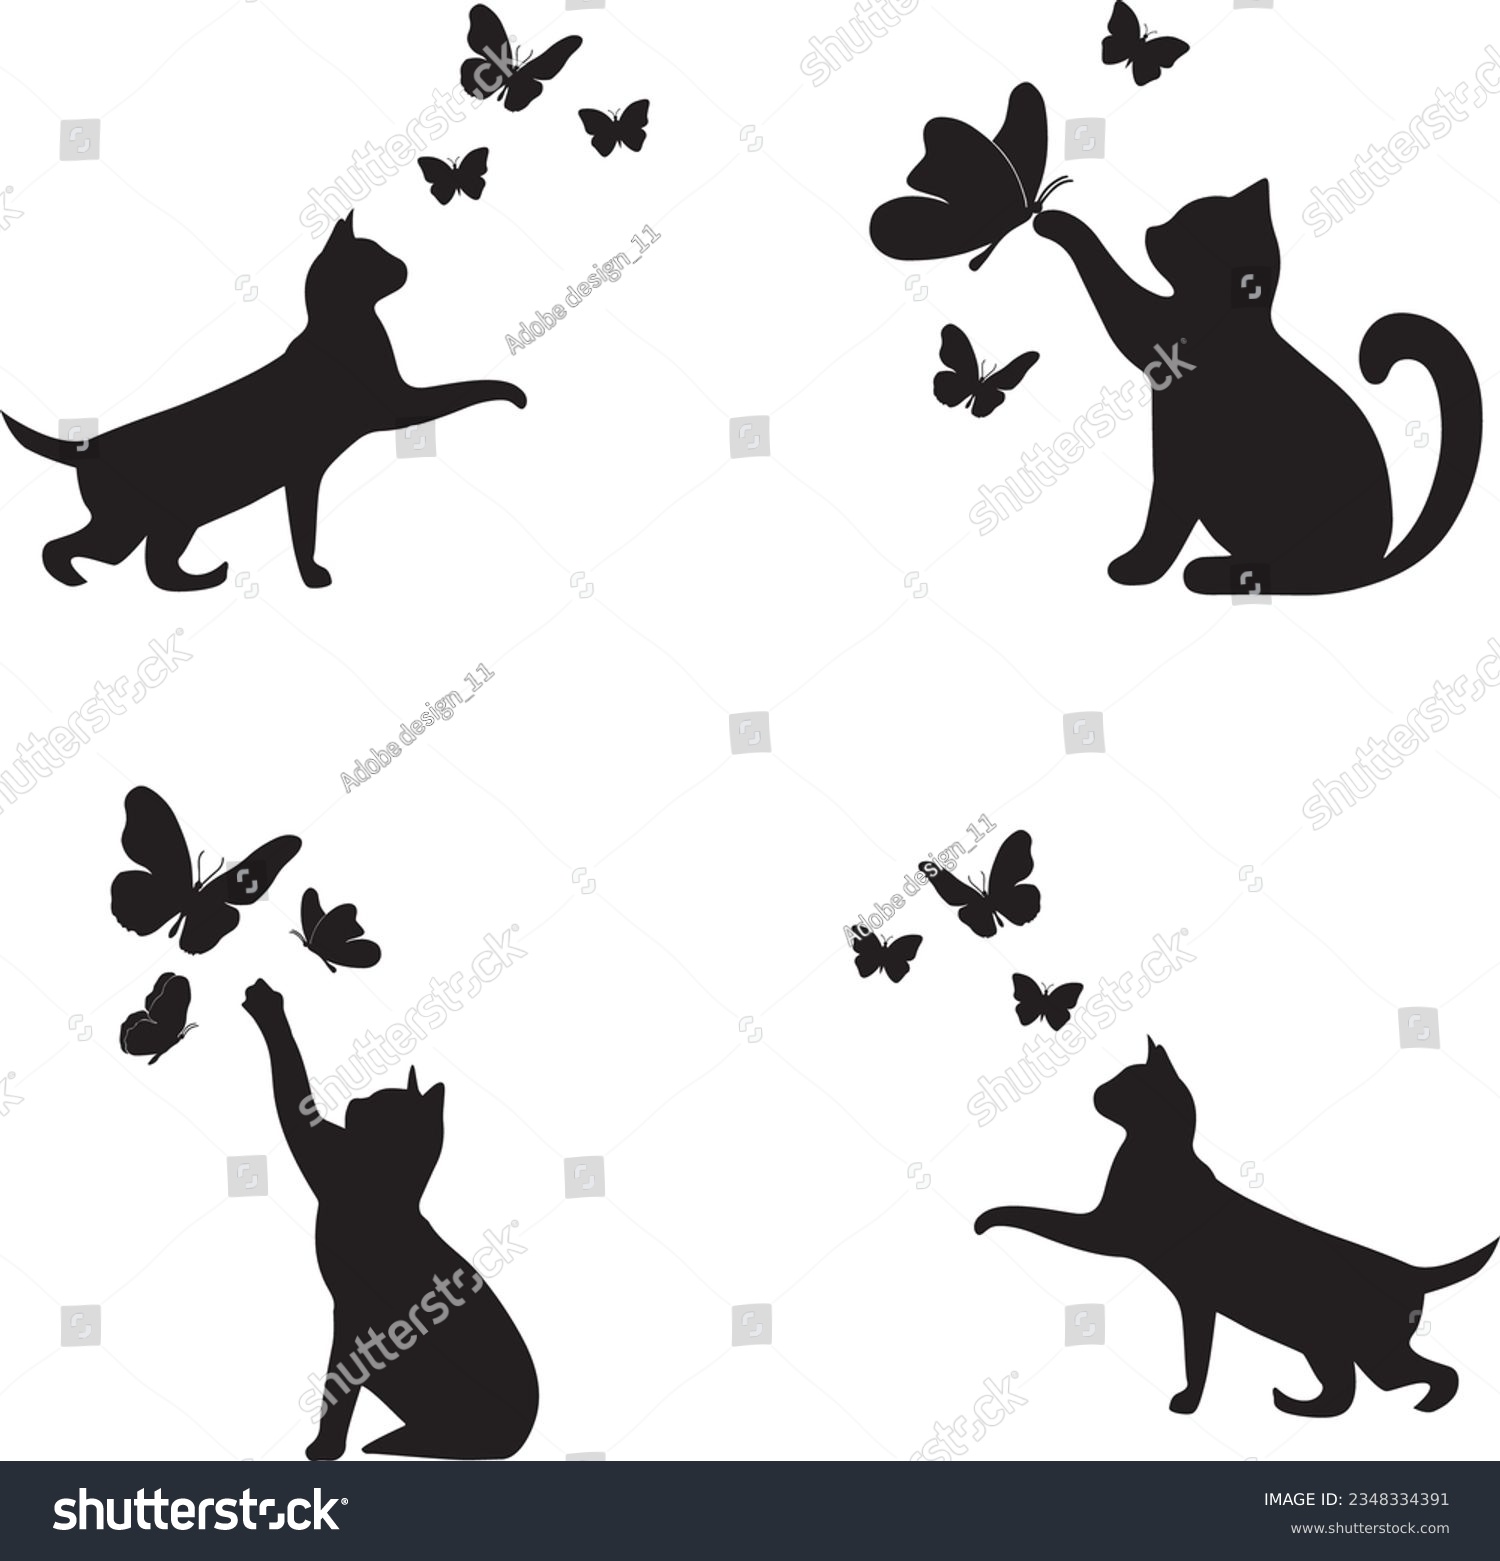 SVG of Cat and butterfly Svg, cat Svg, butterfly Svg, vector illustration svg